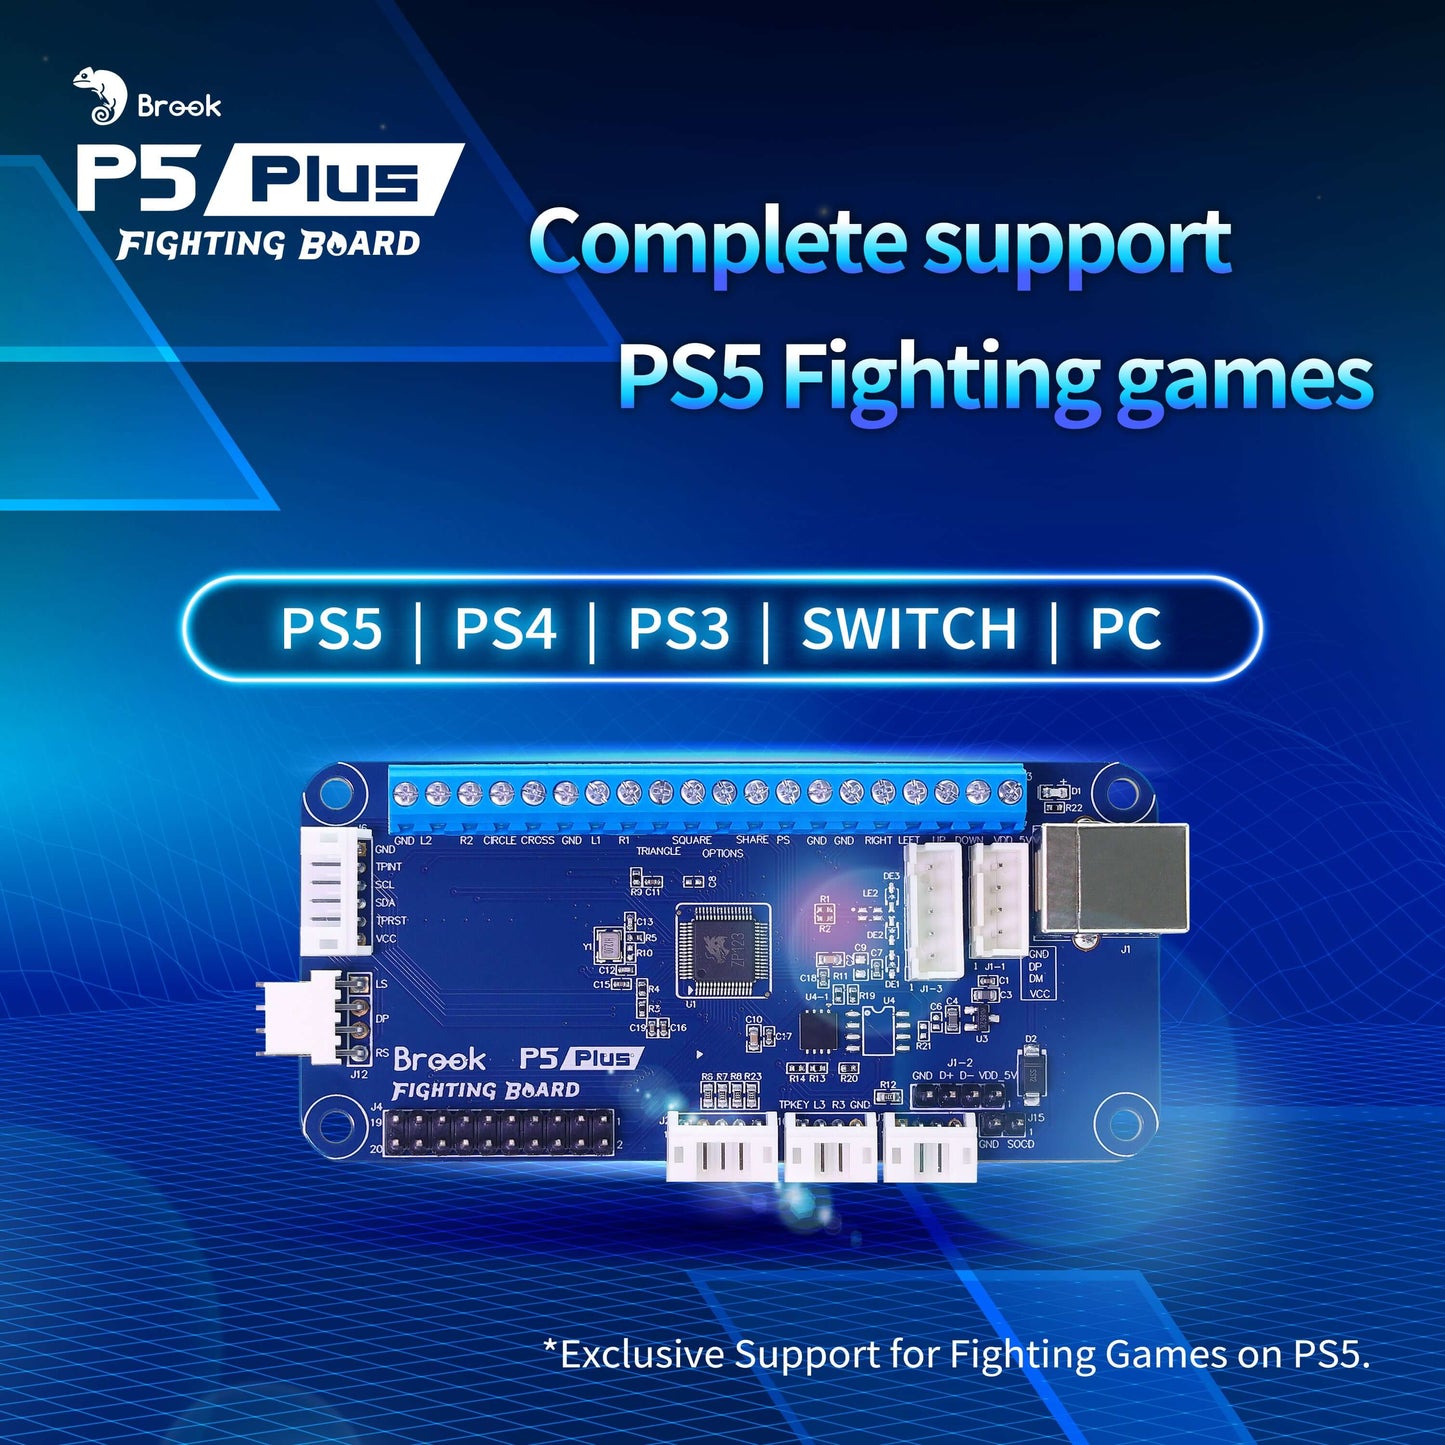 P5 Plus Fighting Board - Pre-installed header version